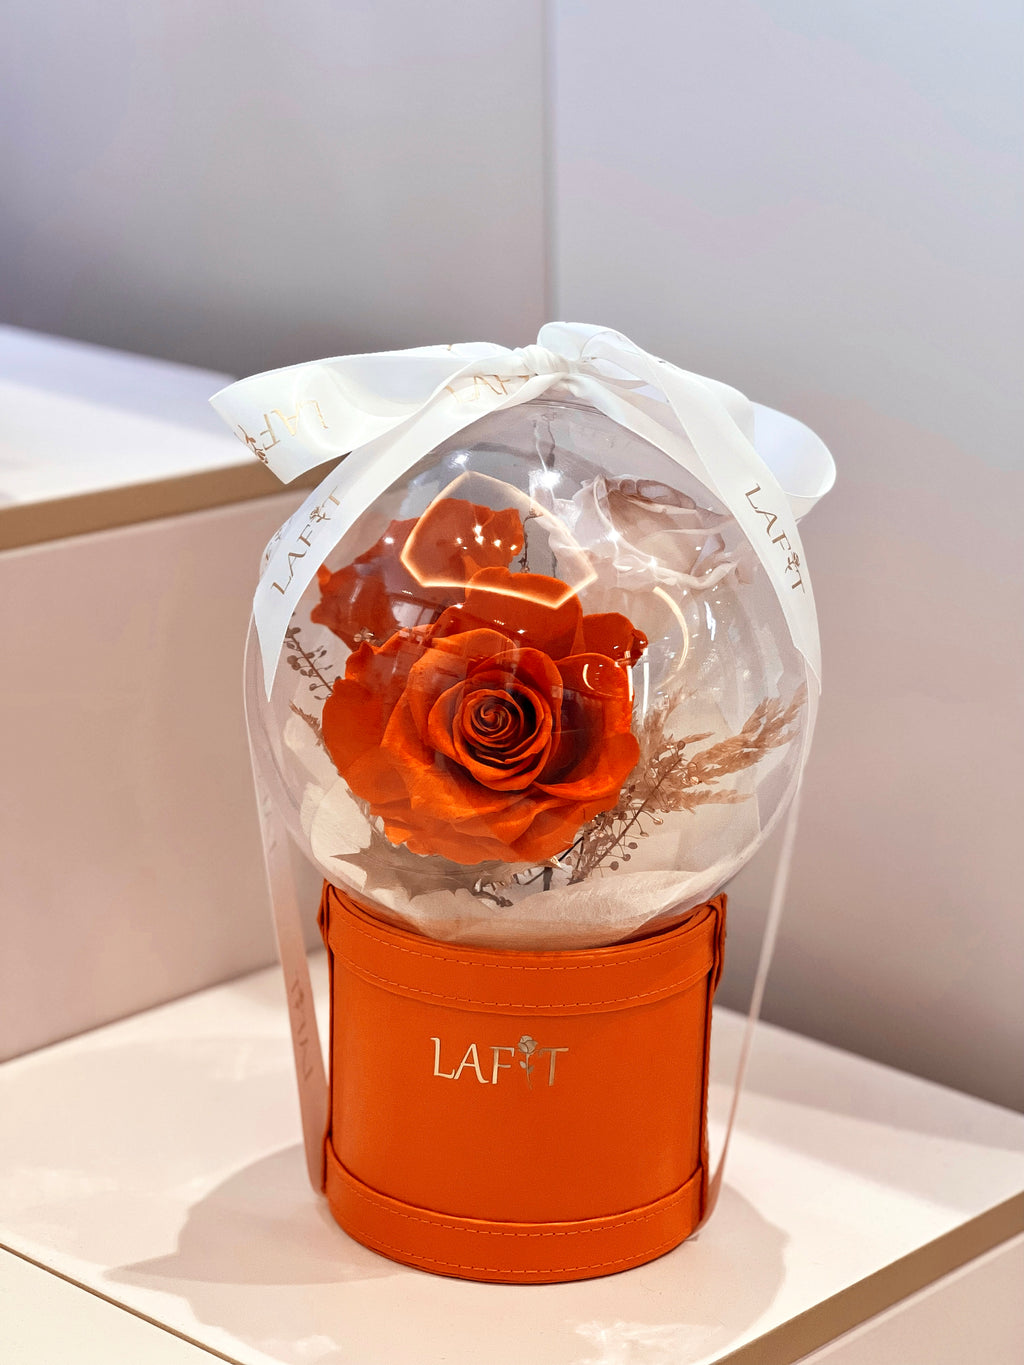 LAFIT 奢華經典永生花藝擺設 ·Rose Sparkling Bubble - Orange